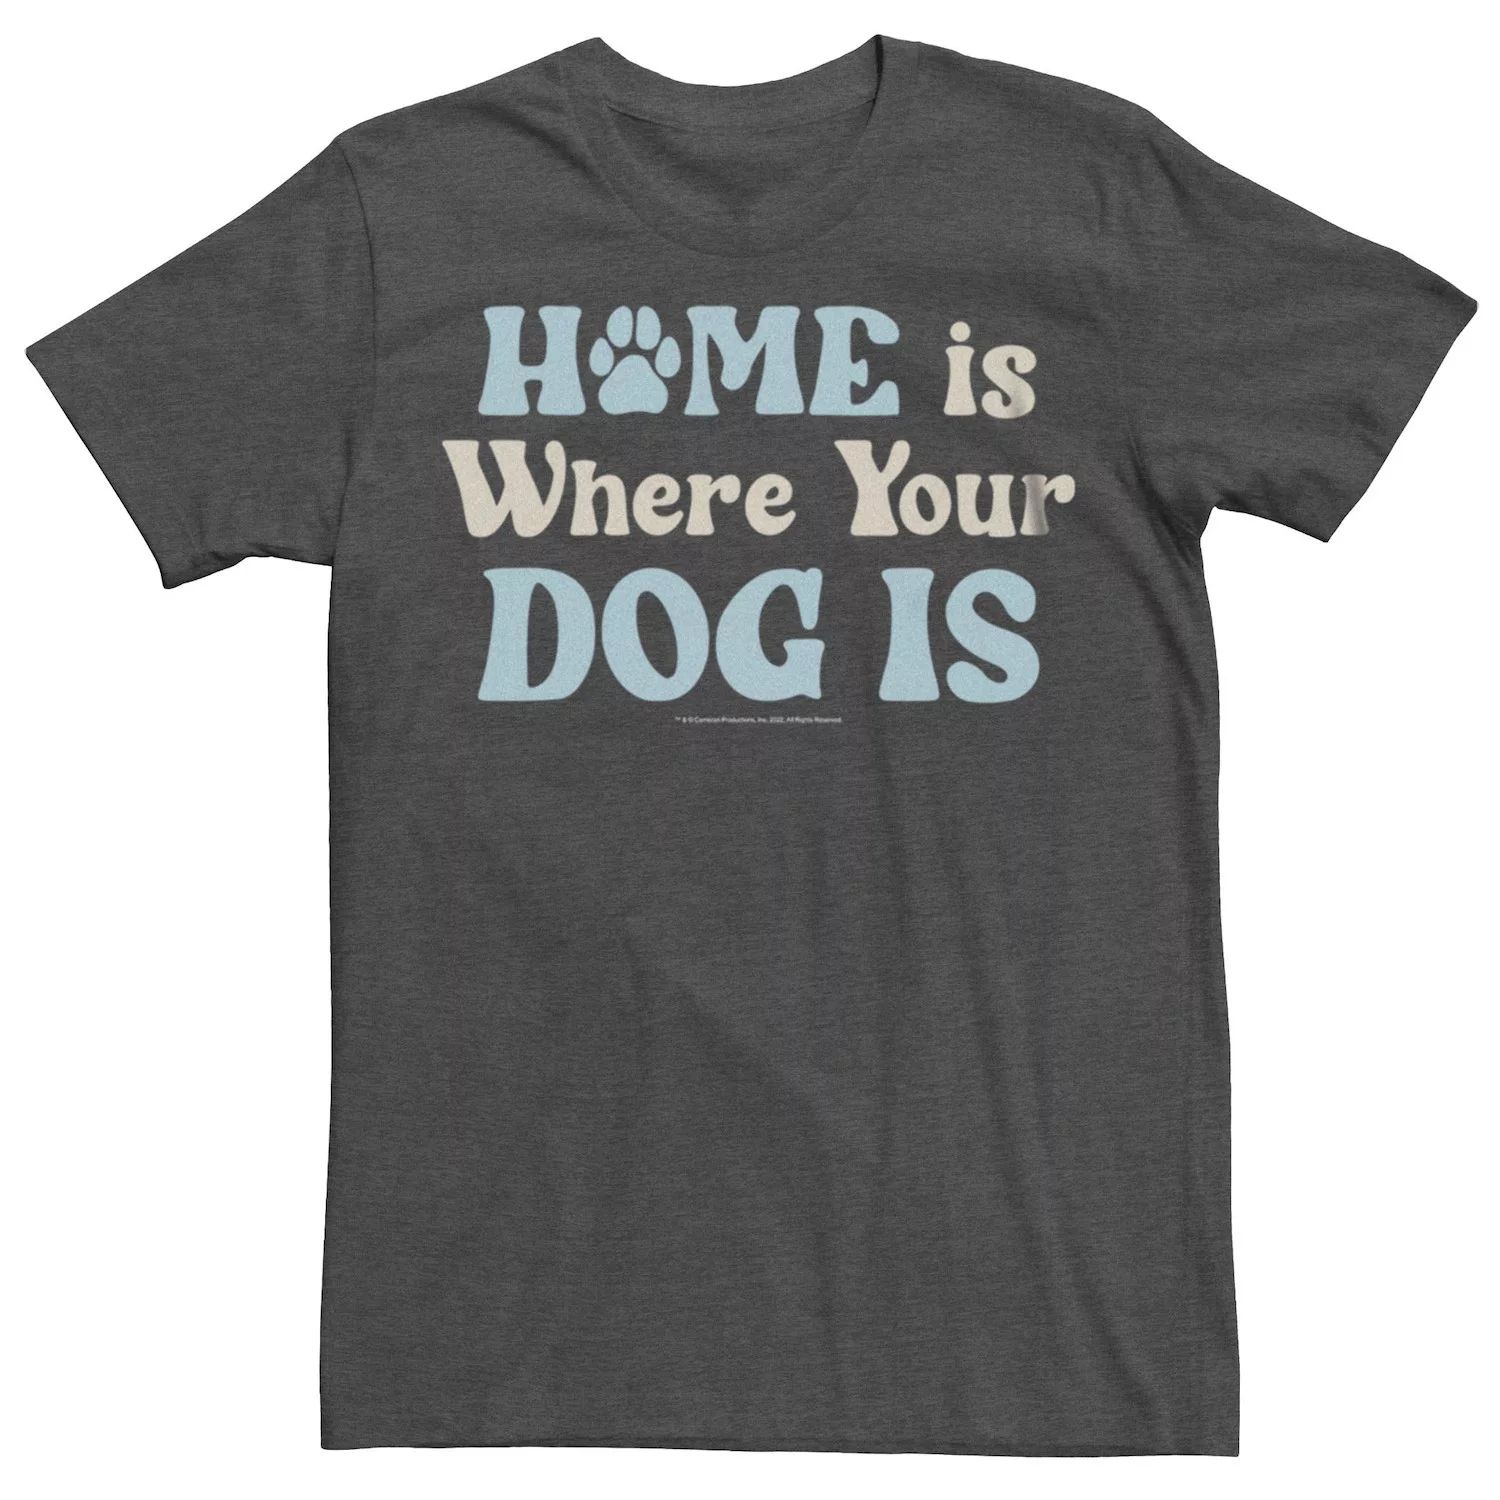 cameron b a dog’s purpose Мужская футболка с рисунком «A Dog’s Purpose: дом там, где ваша собака» Licensed Character